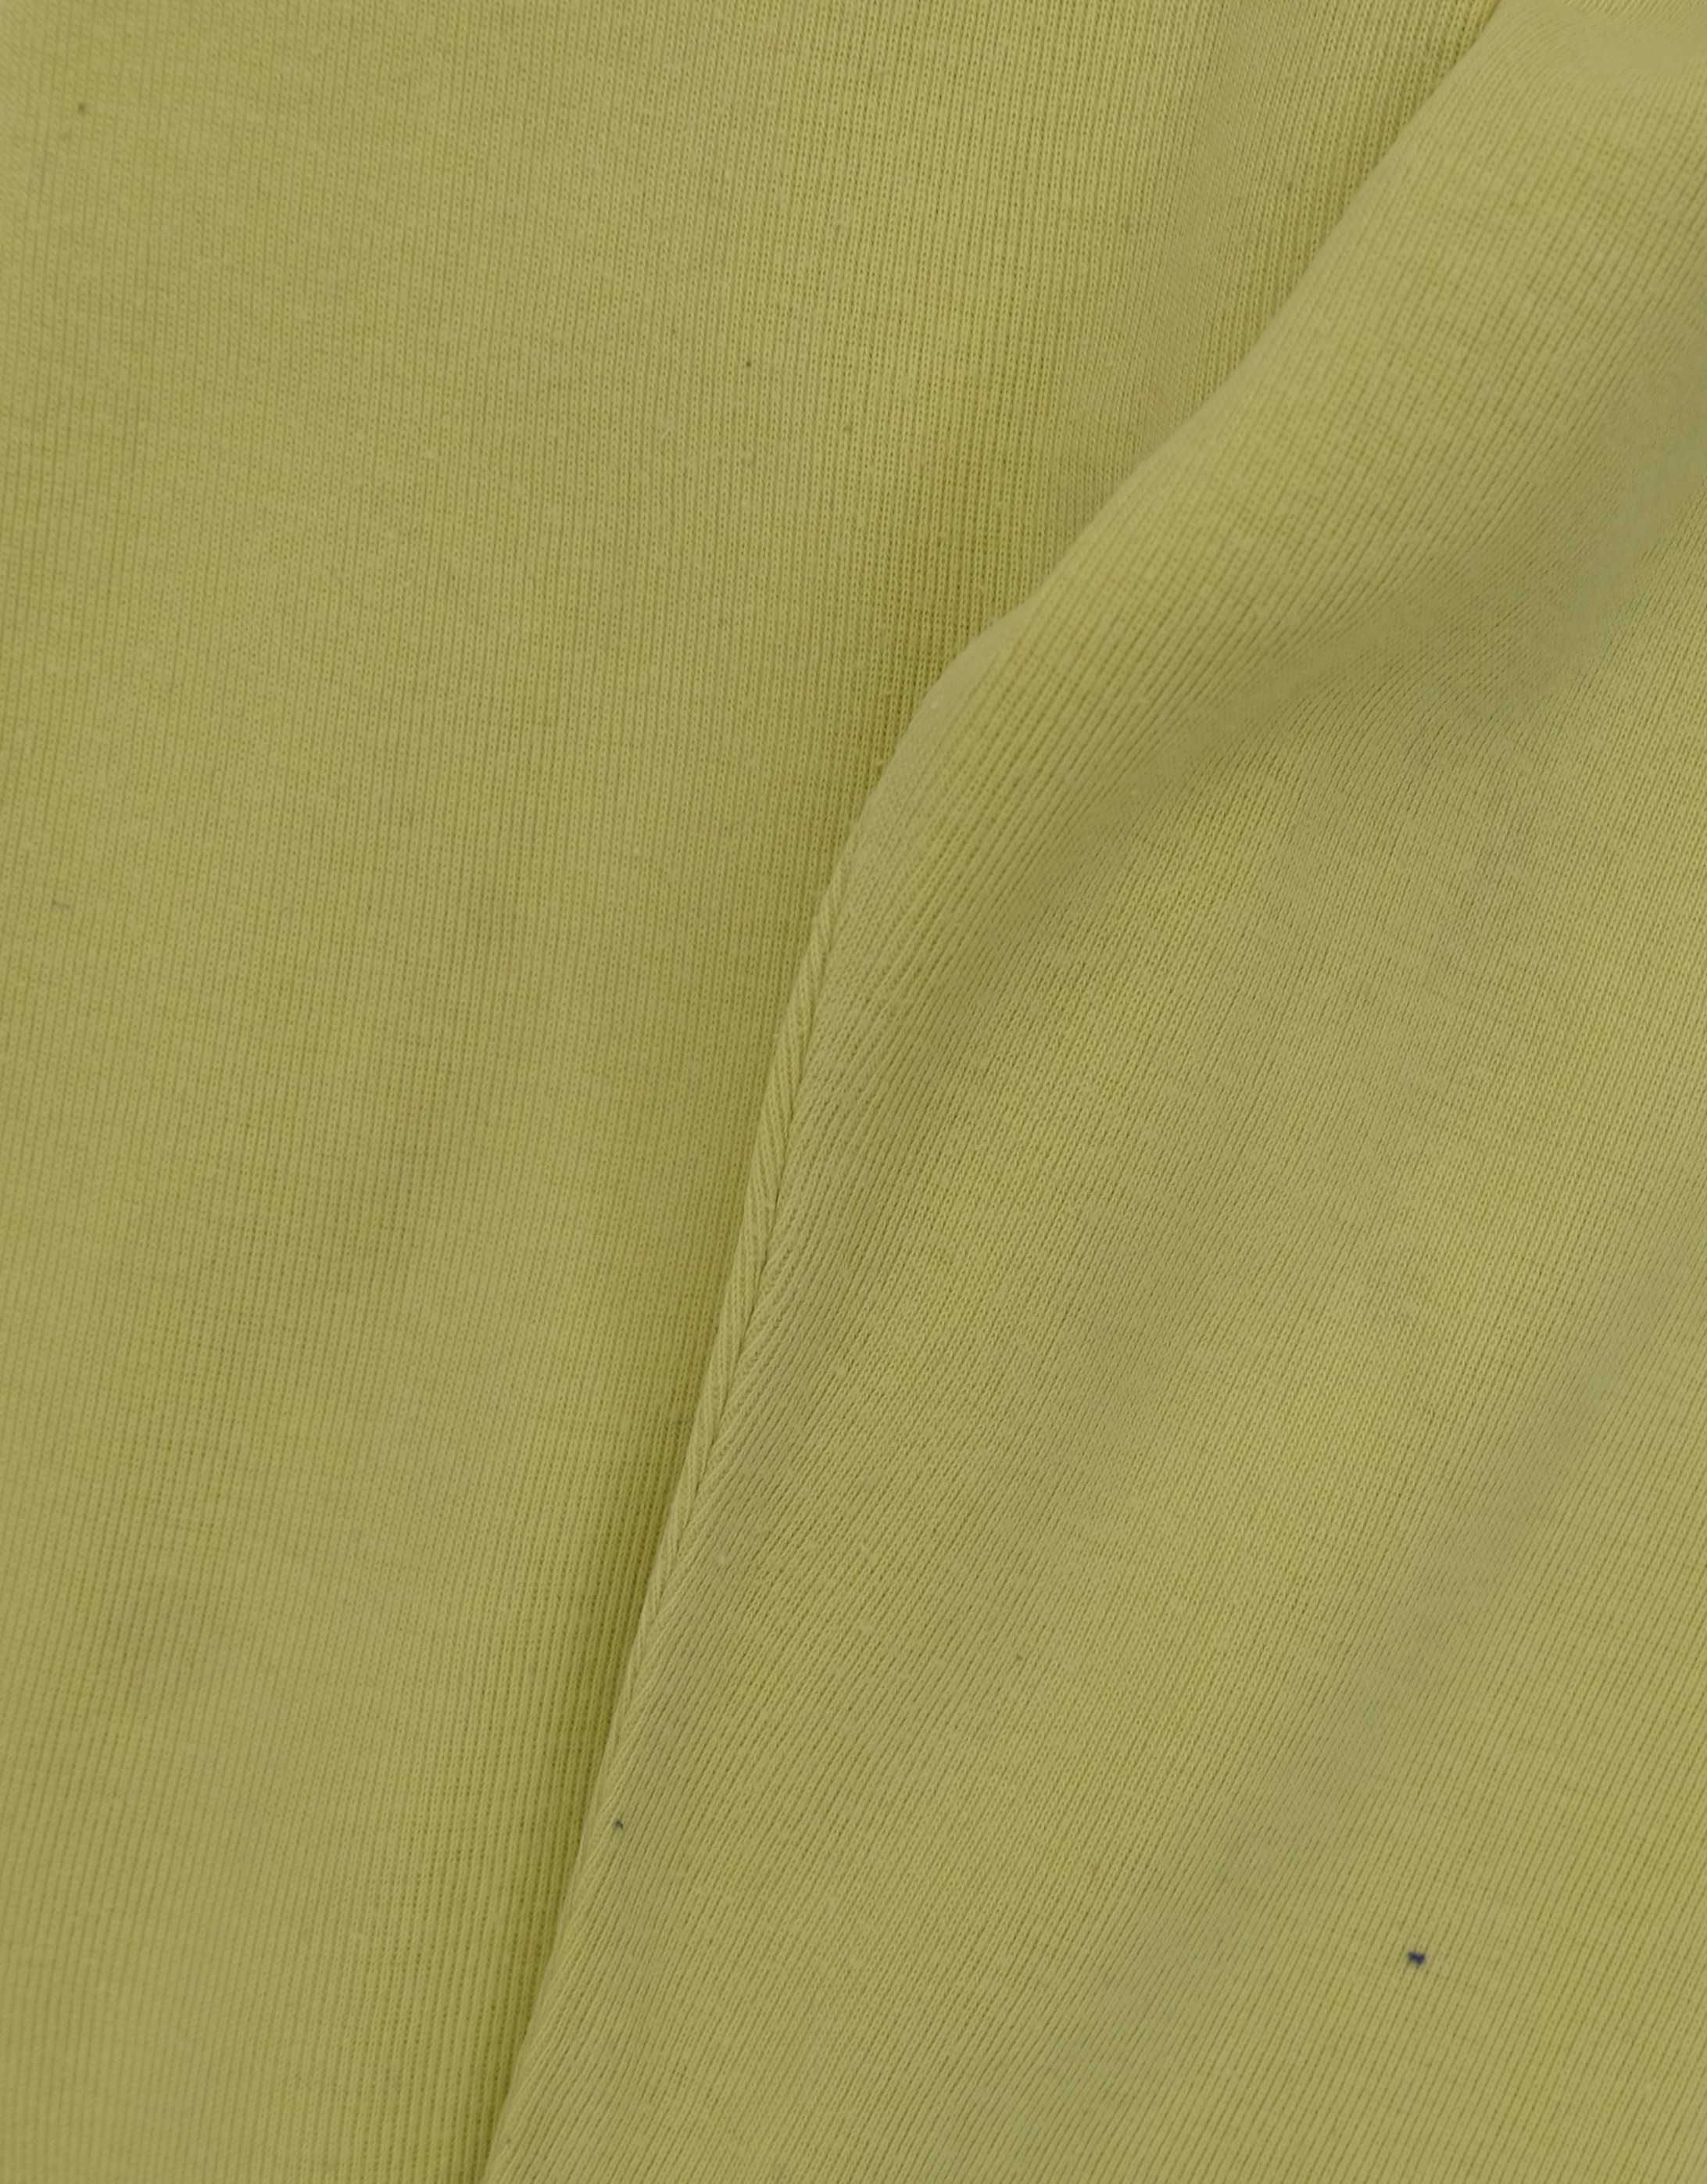 Disney Baby Półśpioch półśpioszek 74 spodenki śpiochy spodnie żółte